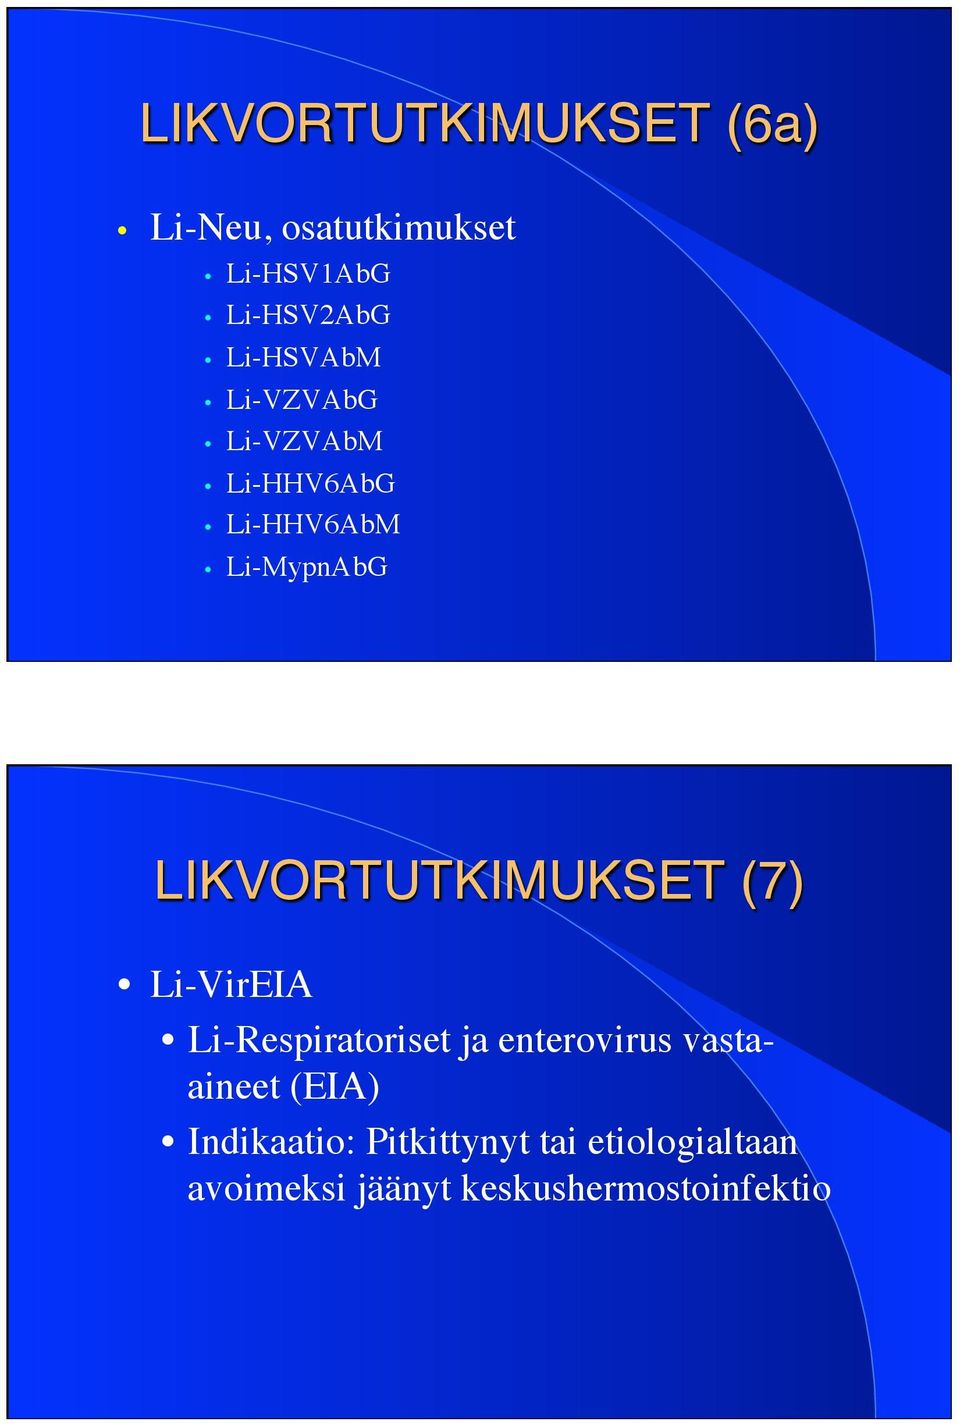 LIKVORTUTKIMUKSET (7)" Li-VirEIA Li-Respiratoriset ja enterovirus